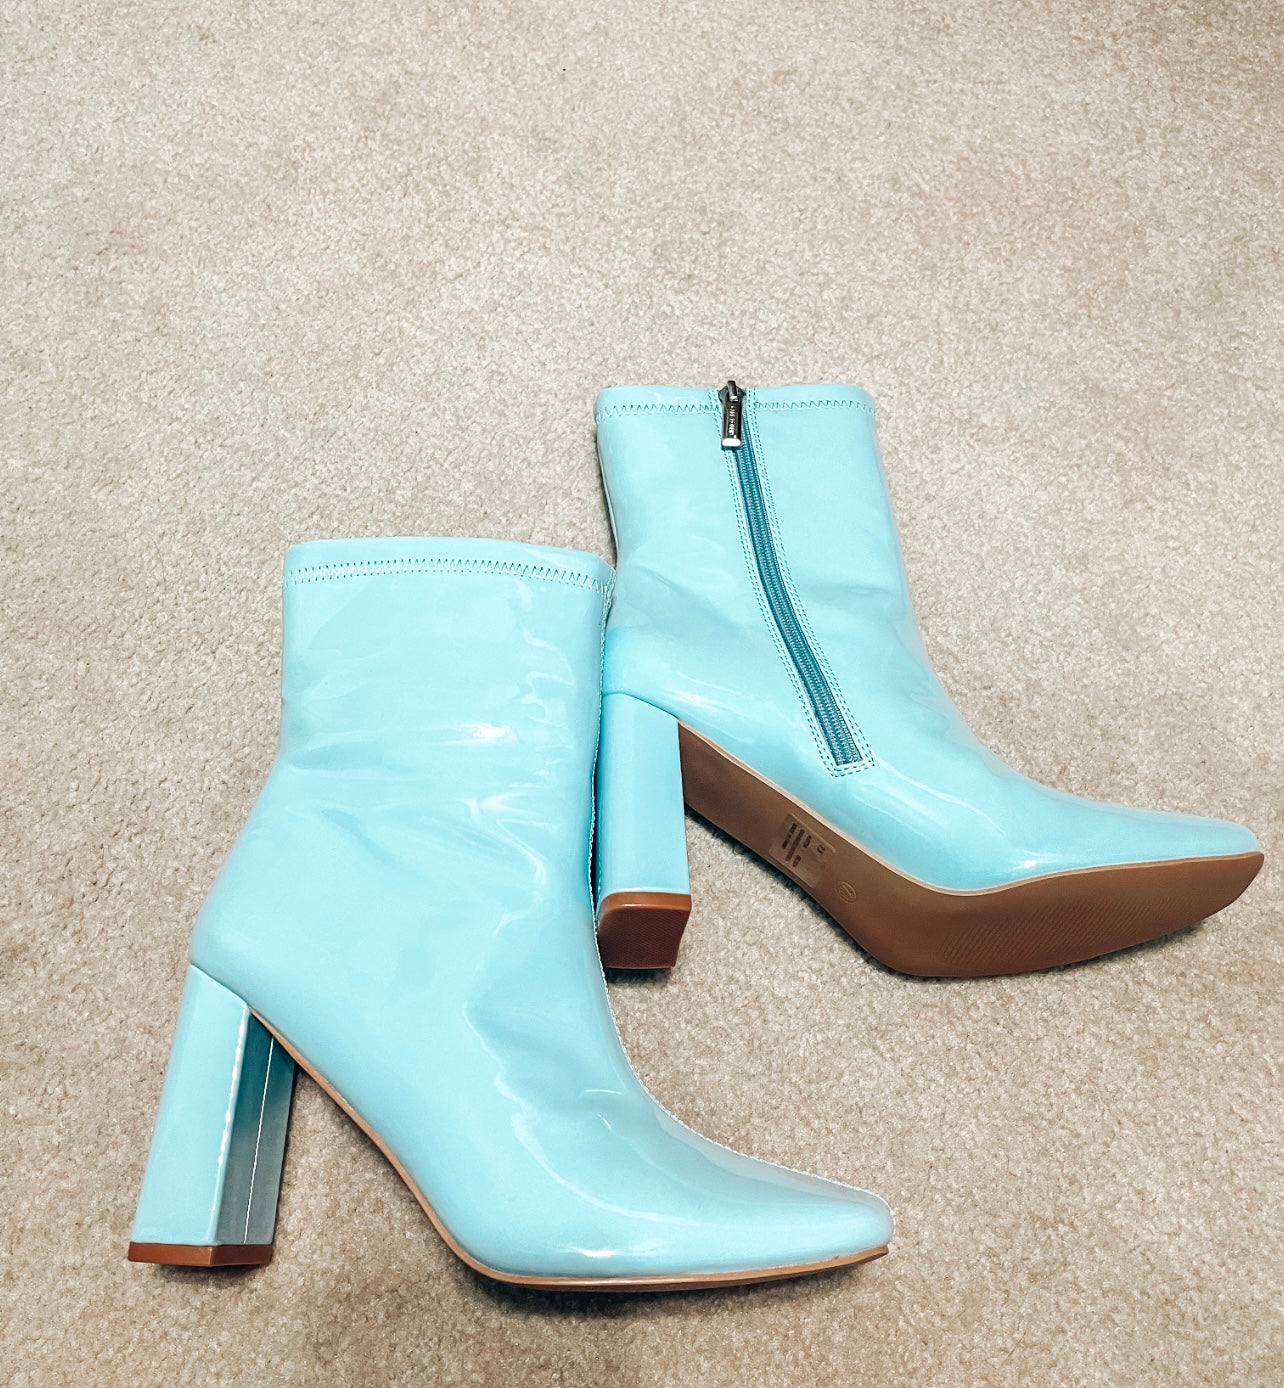 Pretty in Blue Boots - Alexa Maries